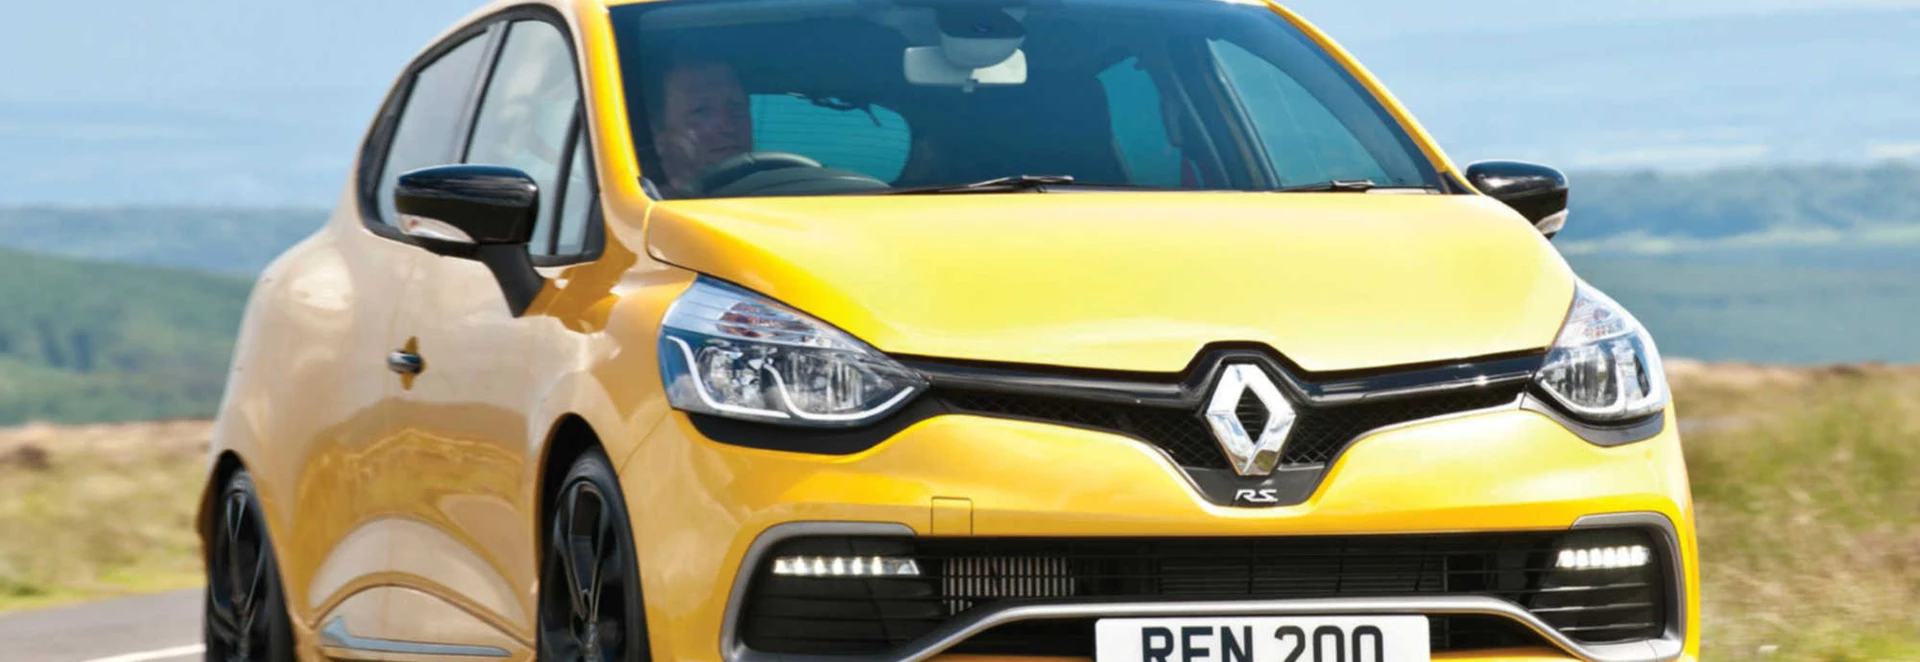 Renault Clio Renaultsport hatchback review 